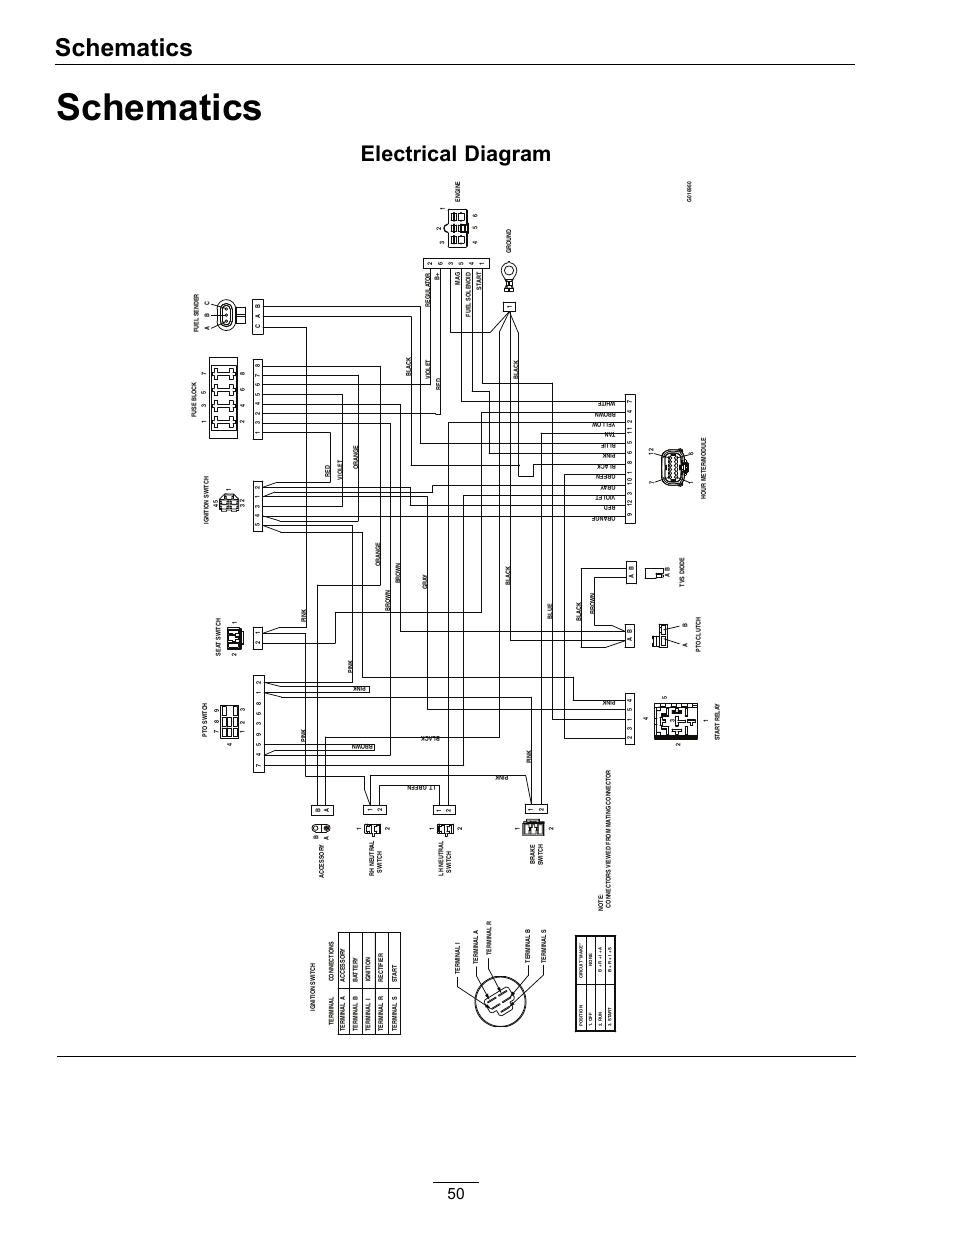 gai tronics wiring diagram